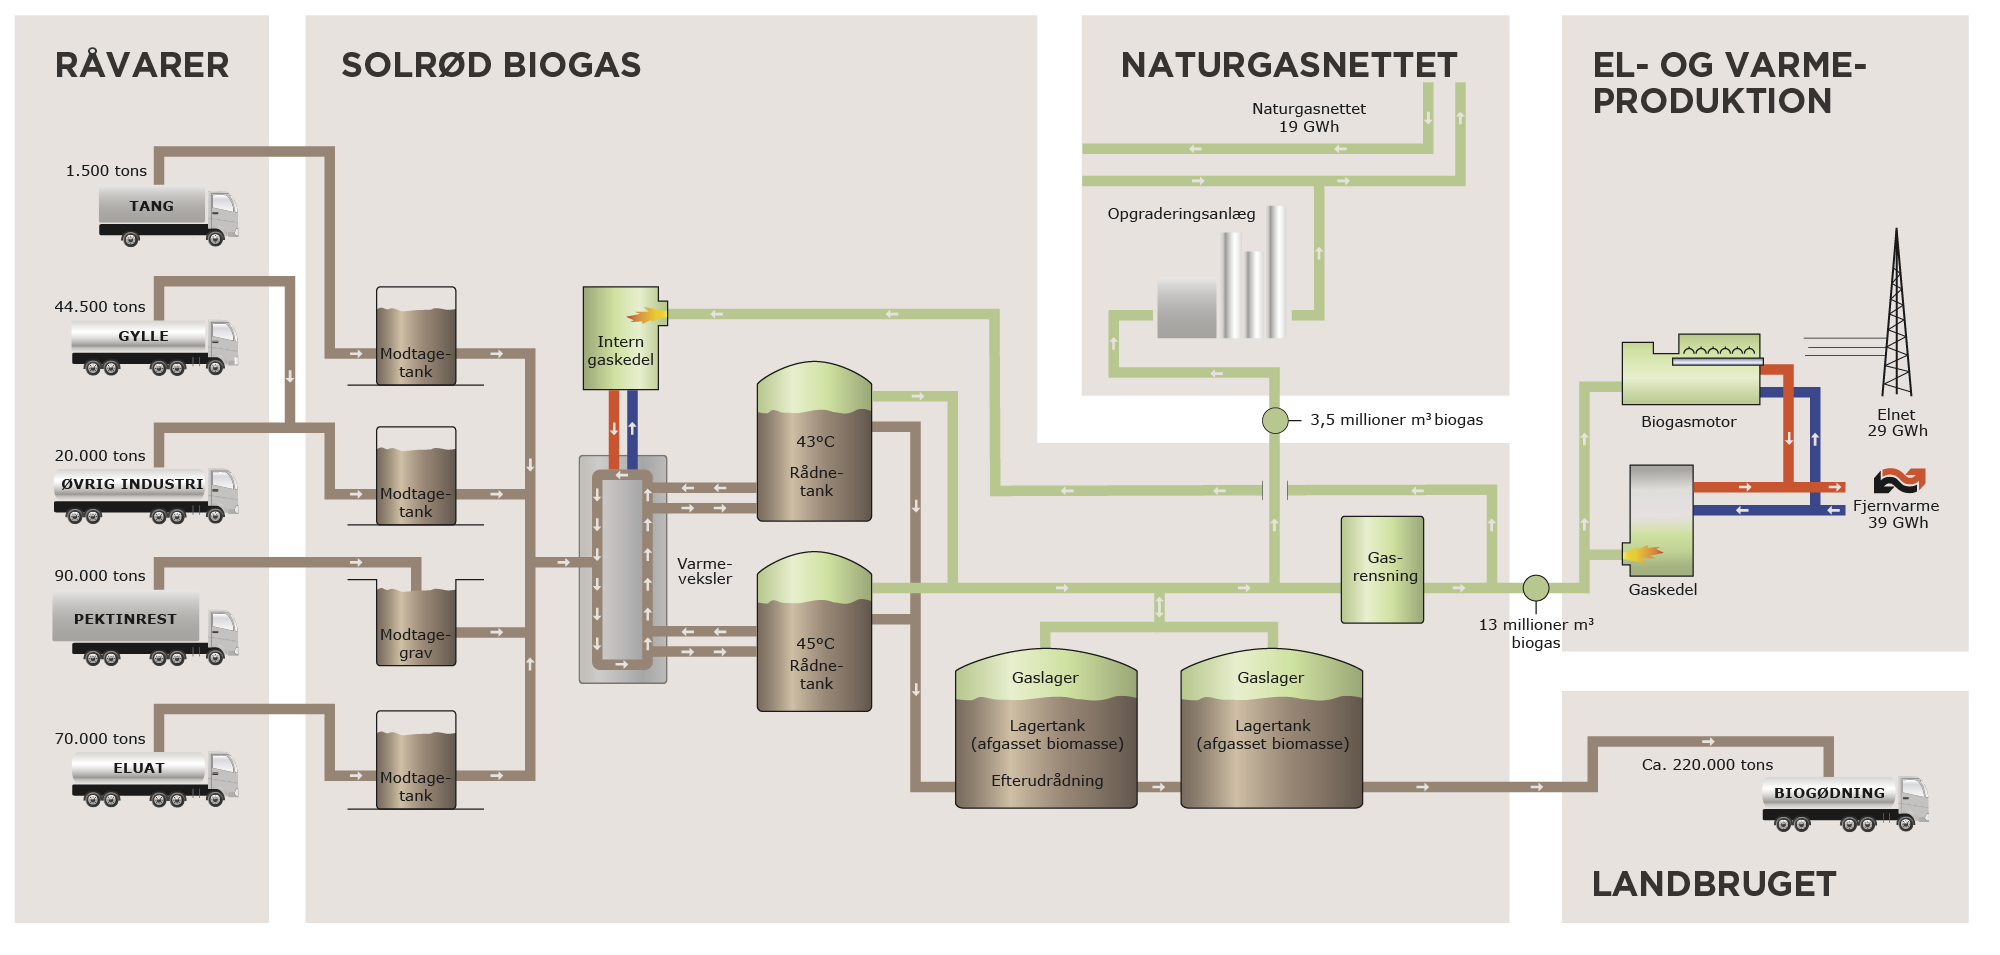 Produktionsproces, Solrød biogas